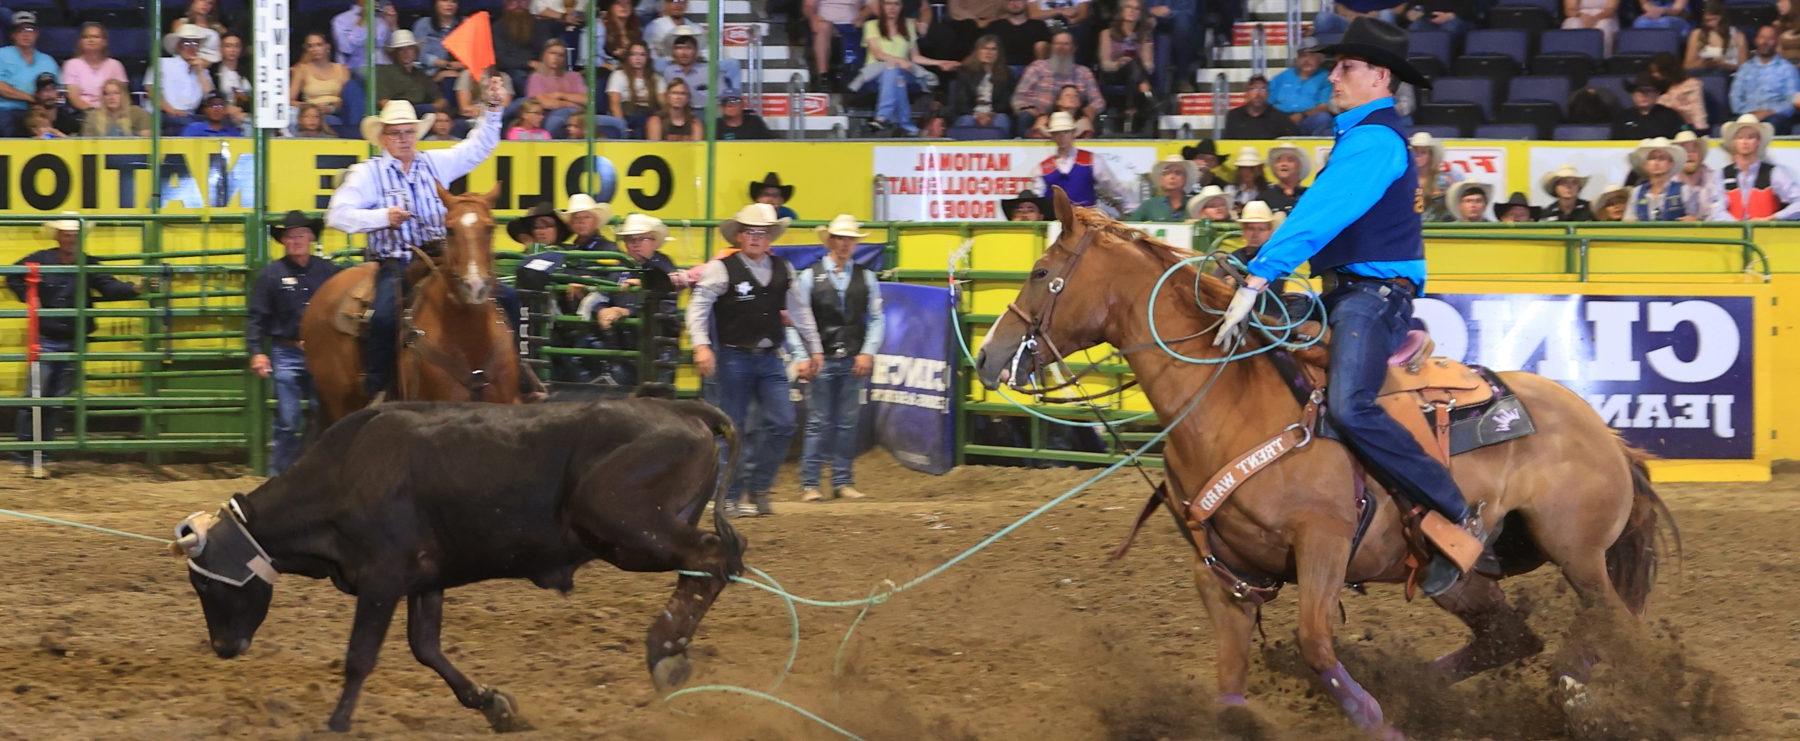 A cowboy lassos a steer during a rodeo event.